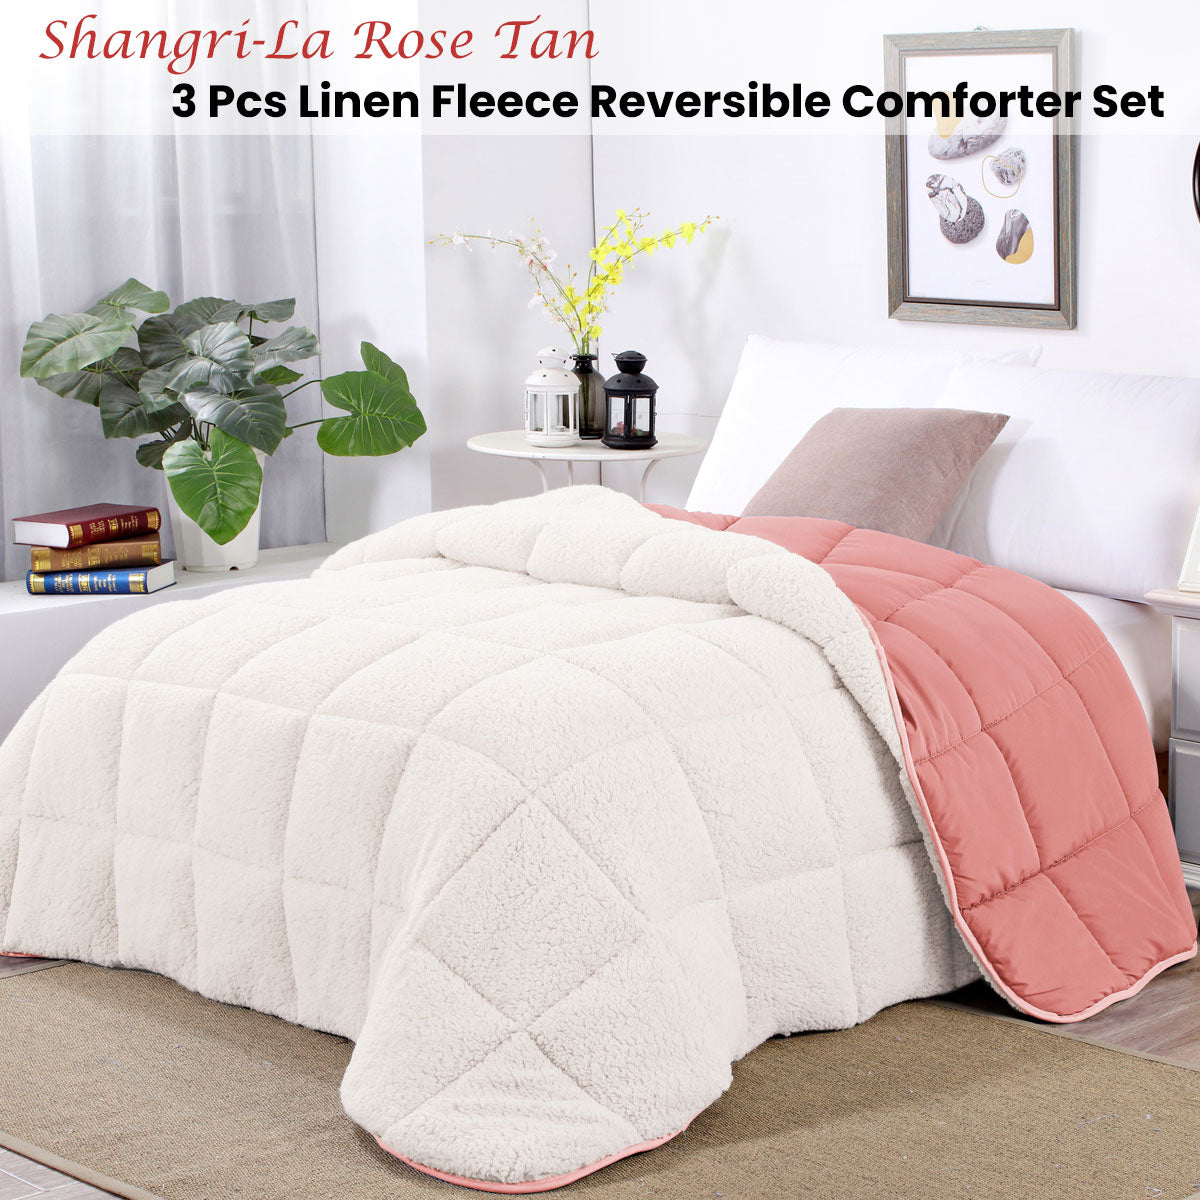 Queen Shangri La Rose Tan Sherpa Fleece Reversible 3 Pcs Comforter Set - White/Pink